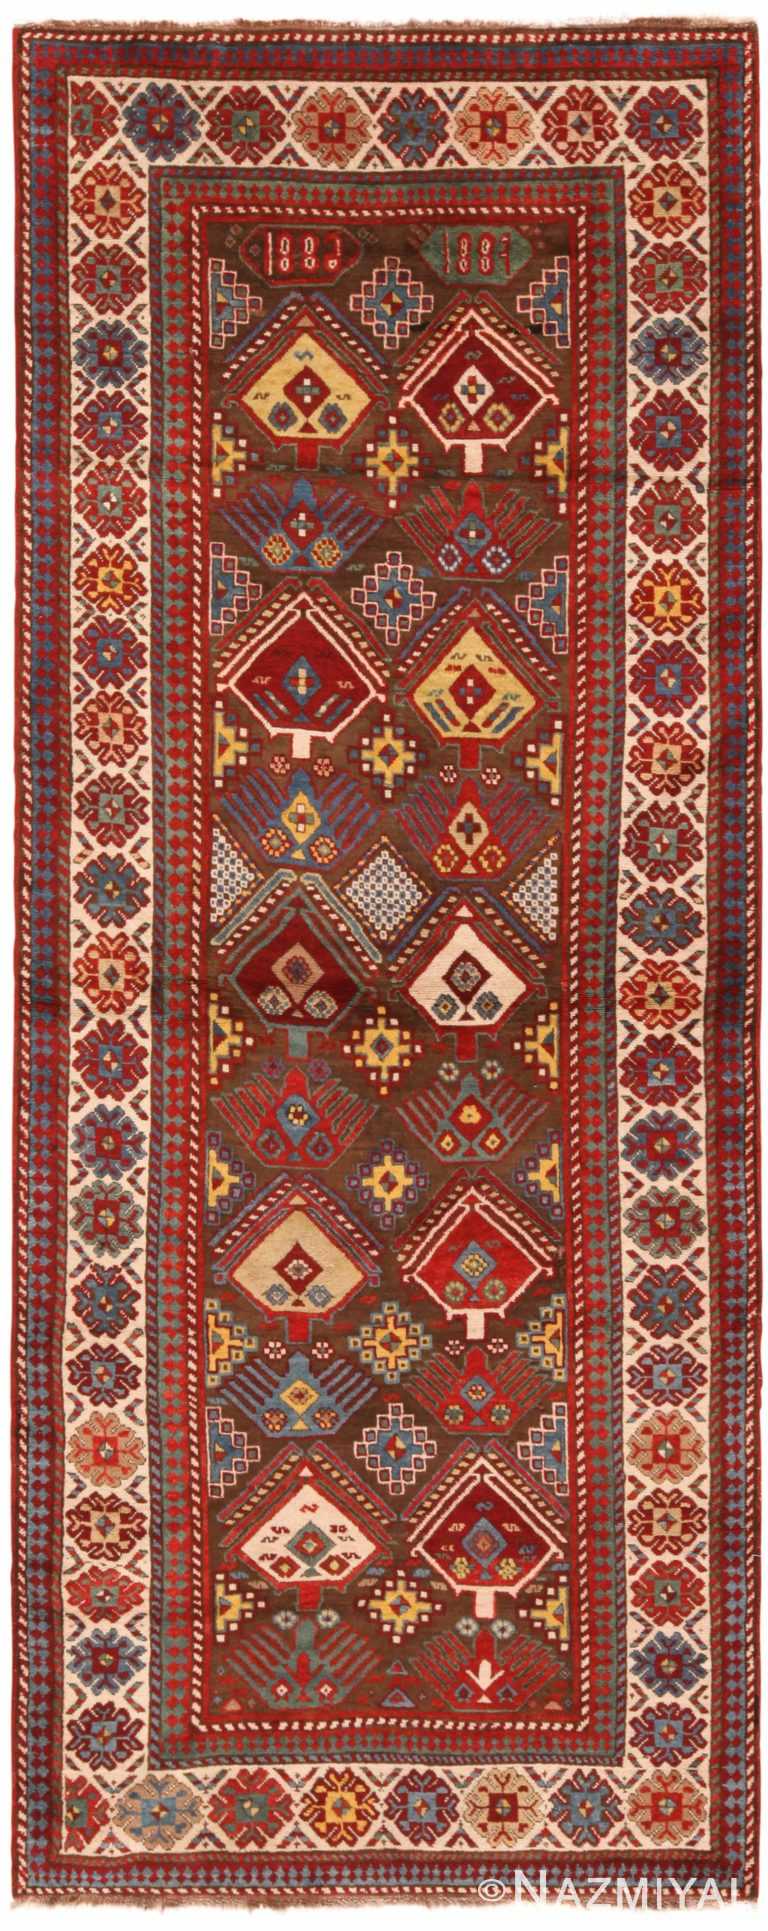 Splendid Antique Caucasian Talish Runner 71163 by Nazmiyal Antique Rugs